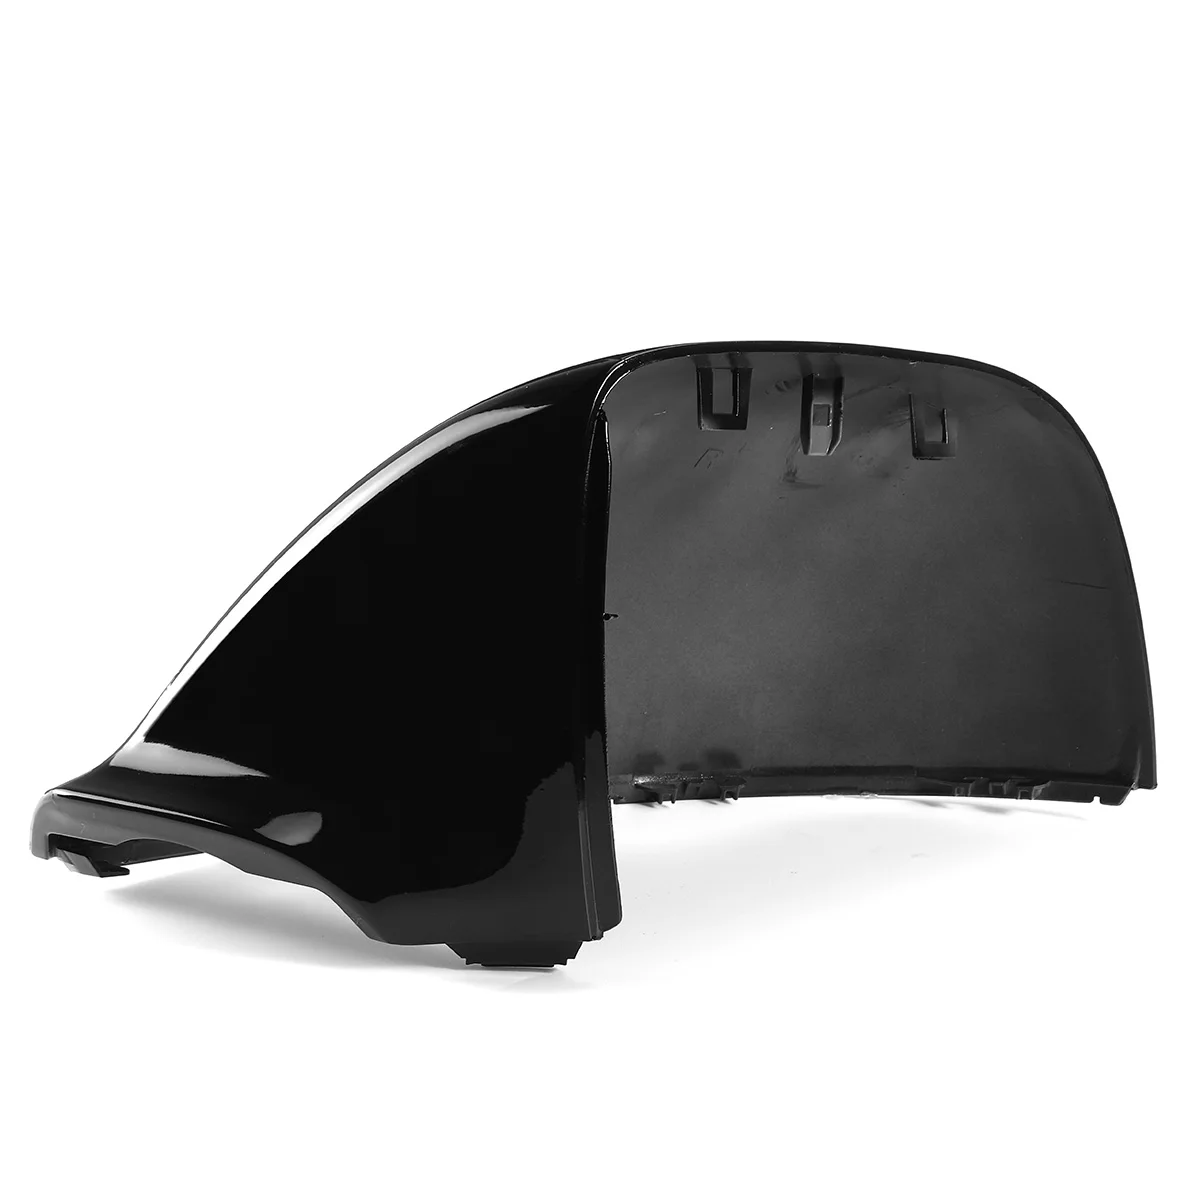 Глянцевая белая/черная Автомобильная боковая зеркальная крышка заднего вида Замена для крышки для Фольксваген для транспортера T5 T5.1 T6 7E1857527F